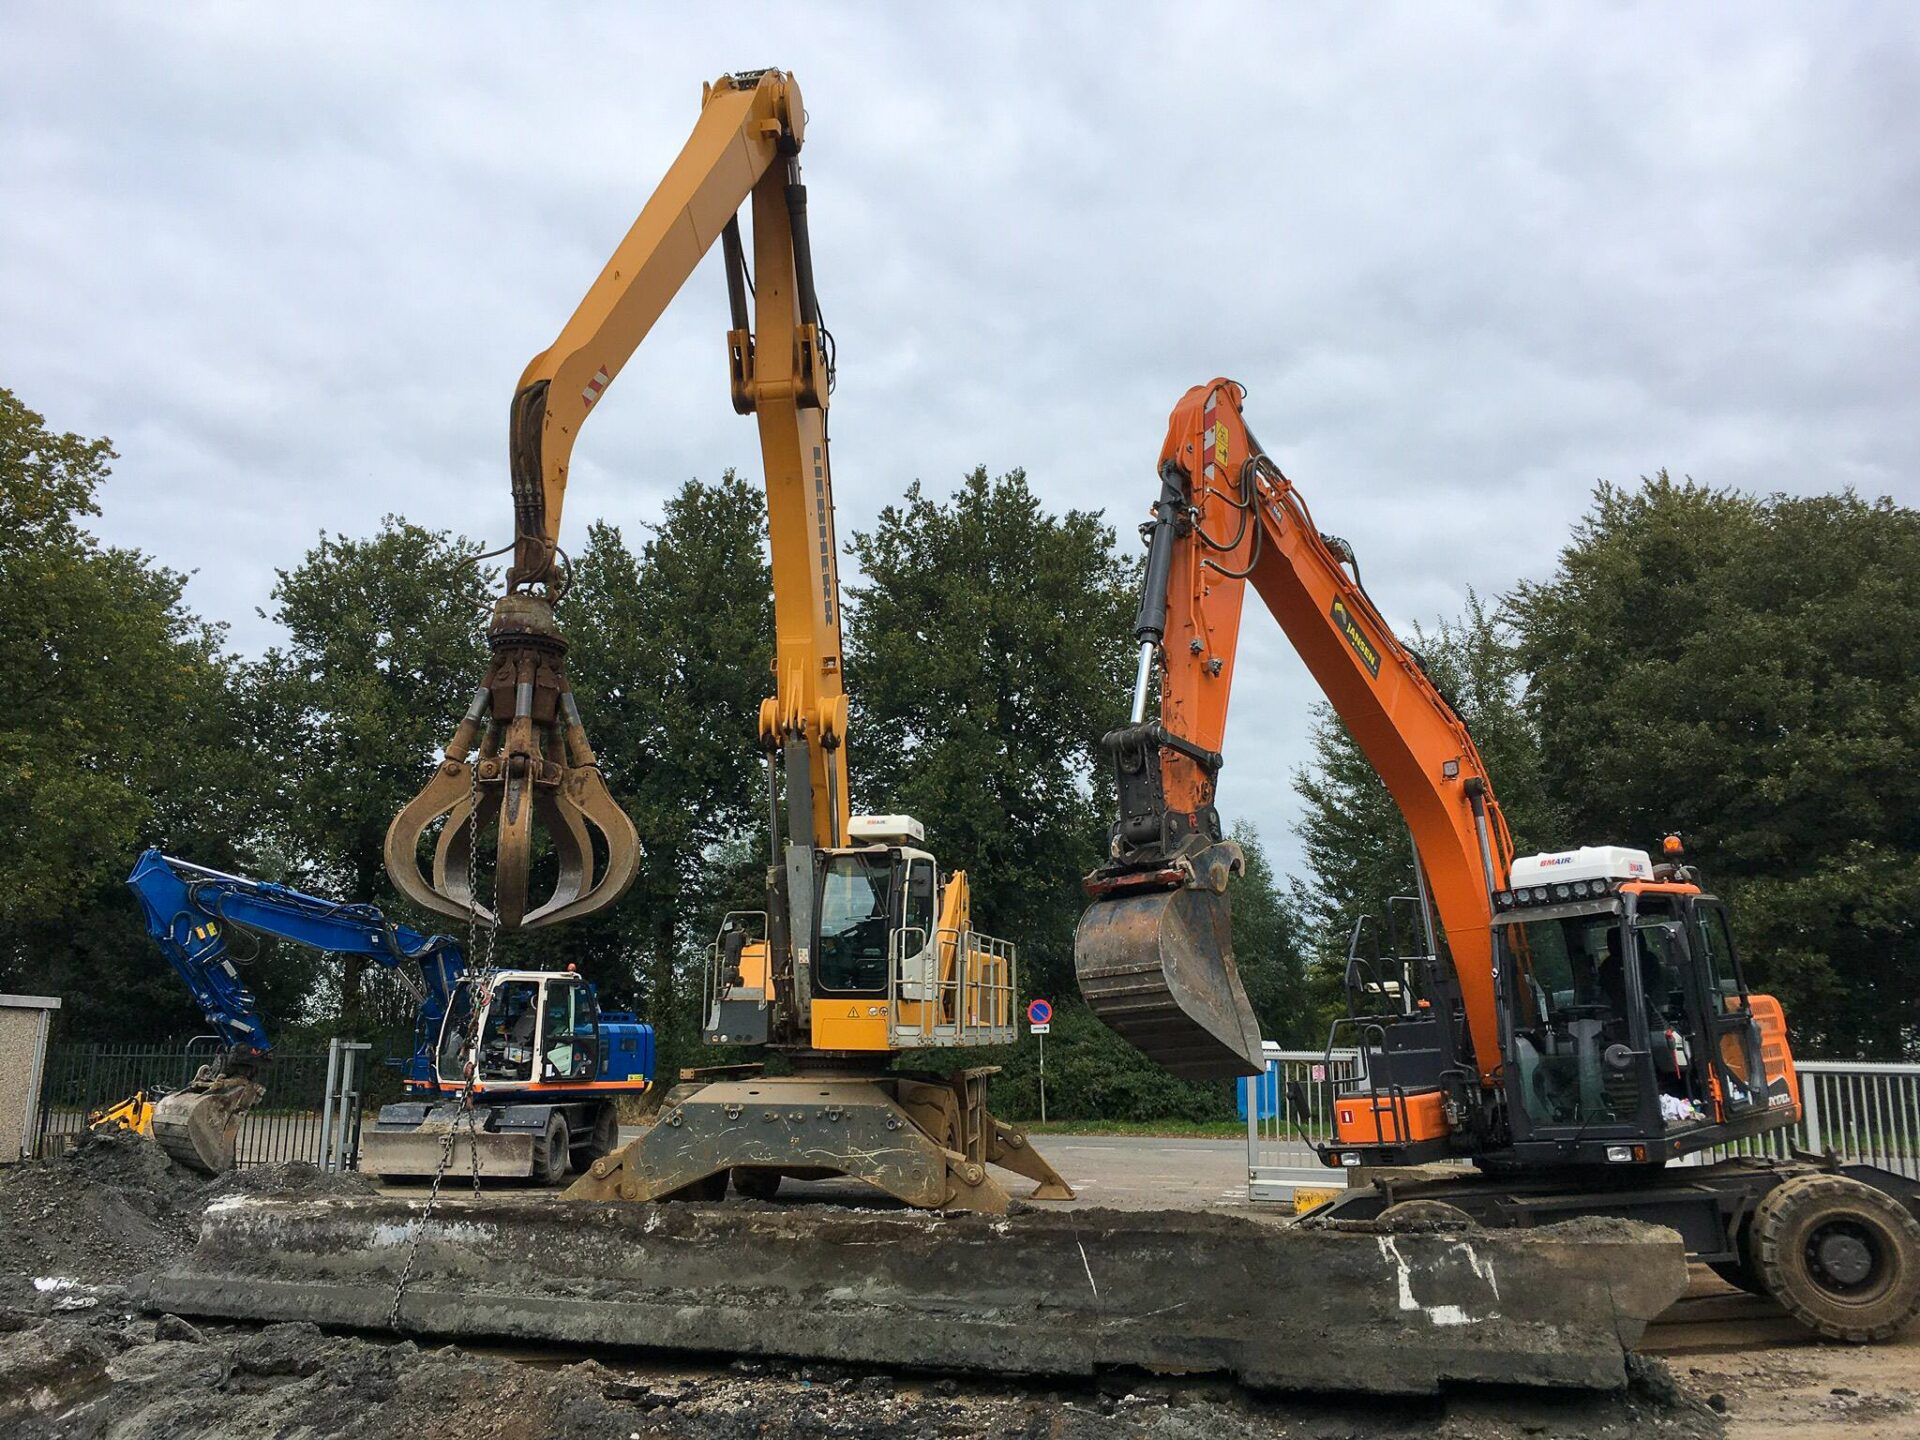 Upgrade for main site road in Dordrecht